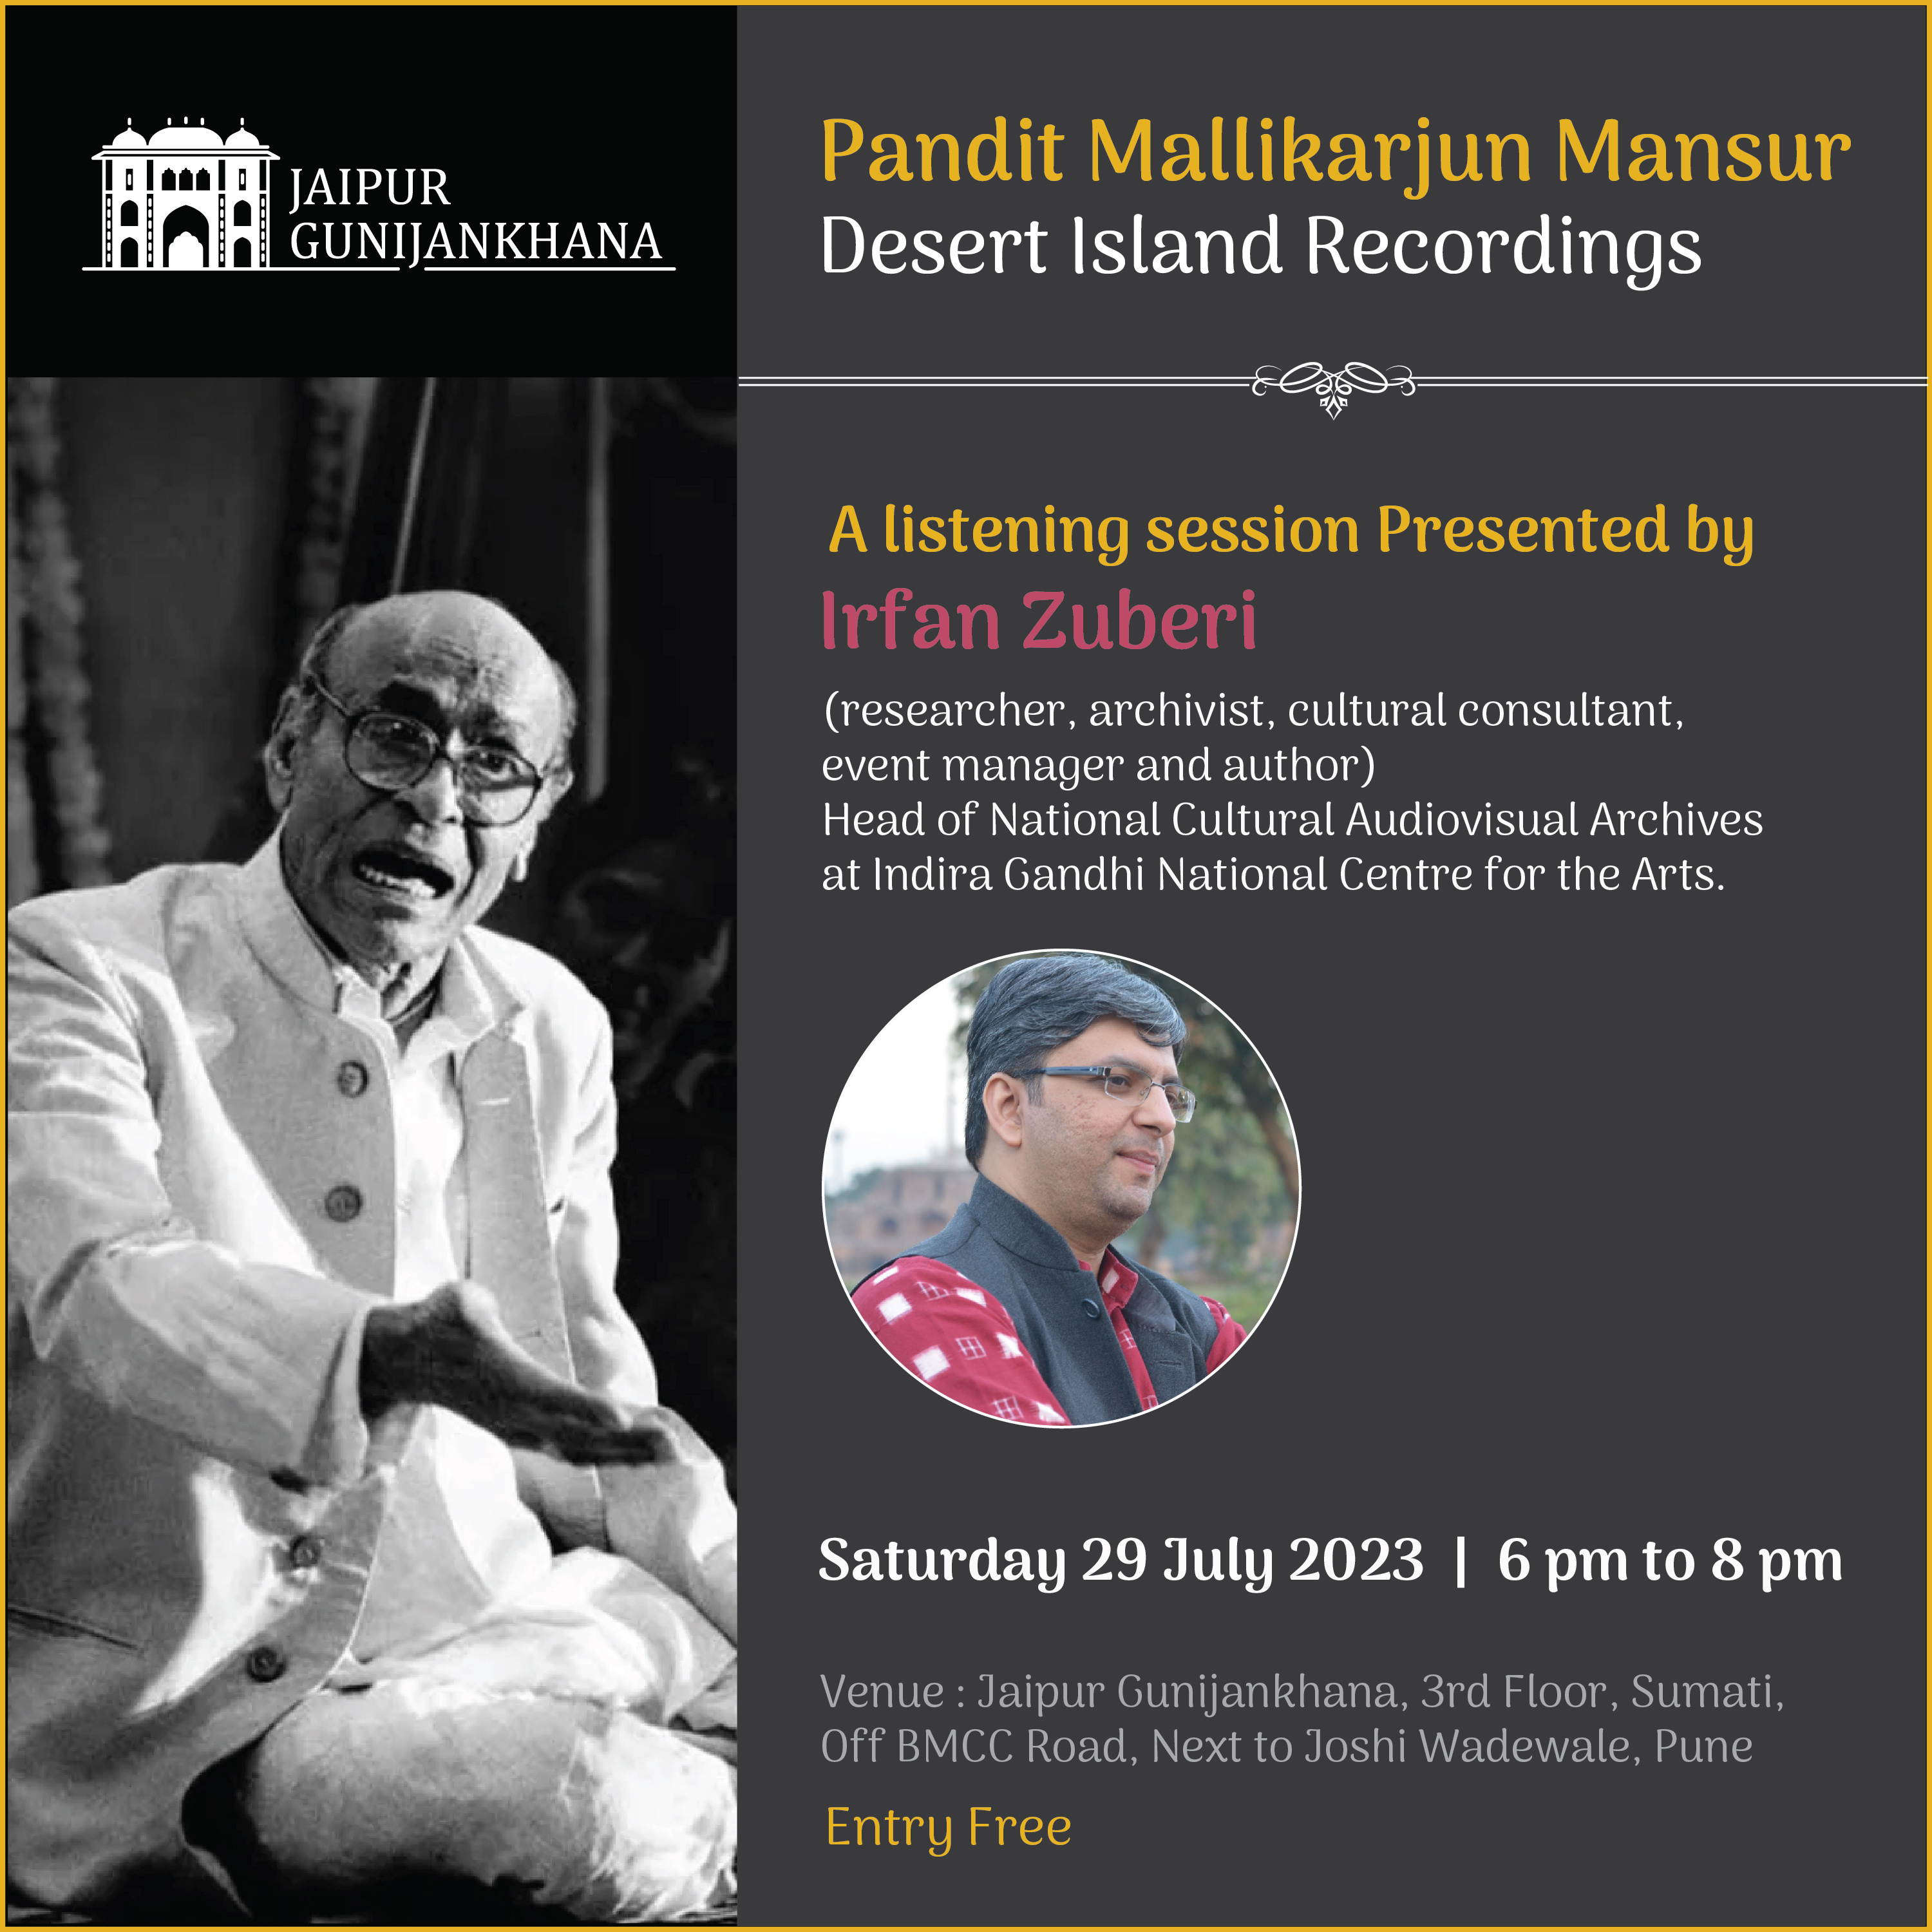 Irfan Zuberi- listening session on Pt. Mallikarjun Mansur